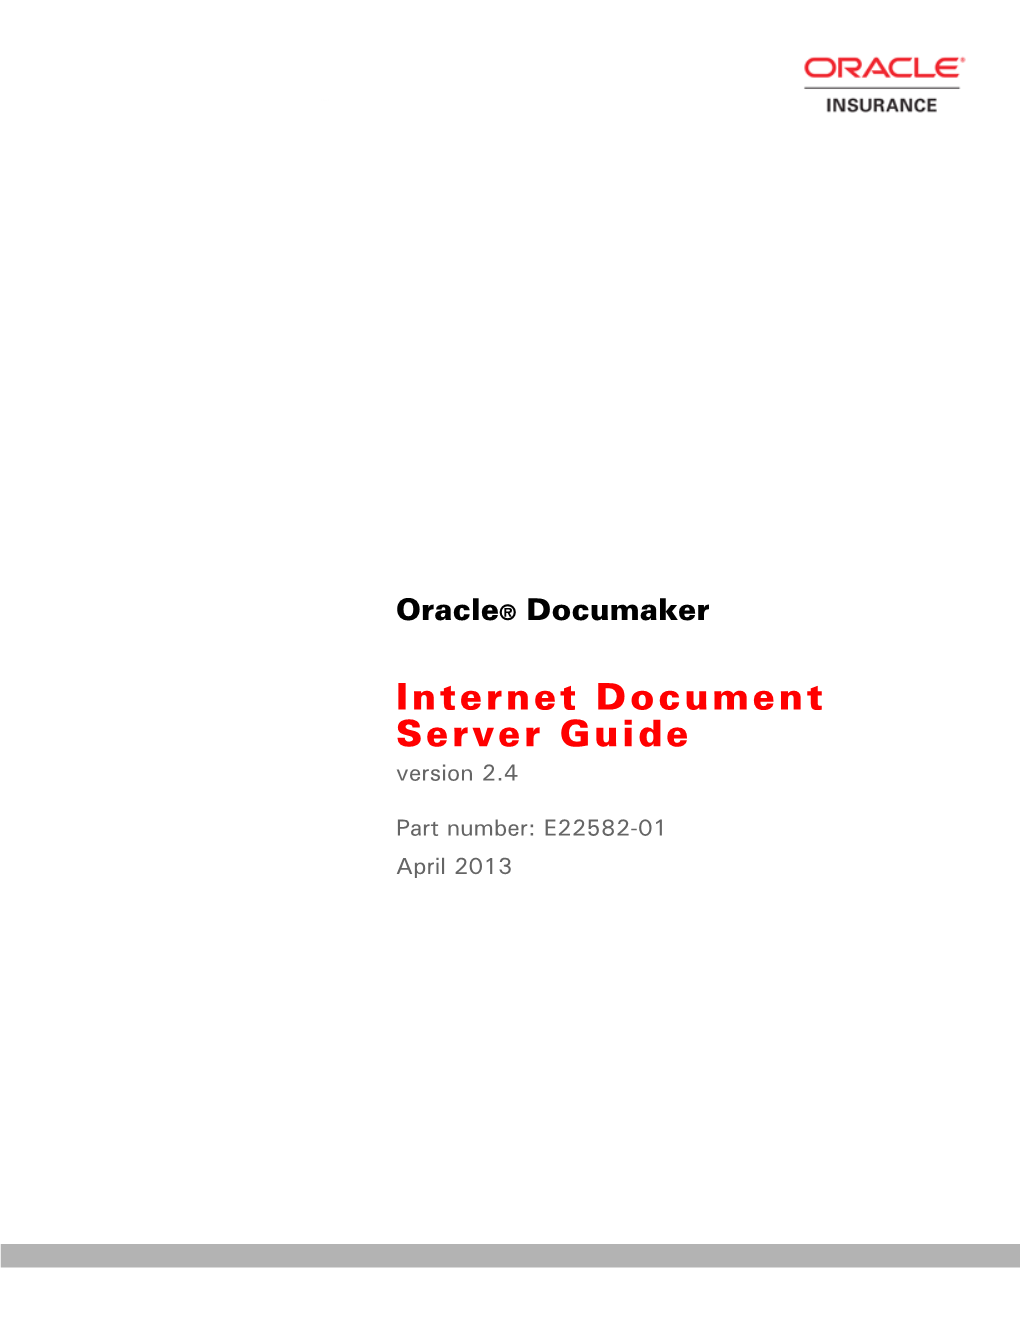 Internet Document Server Guide Version 2.4